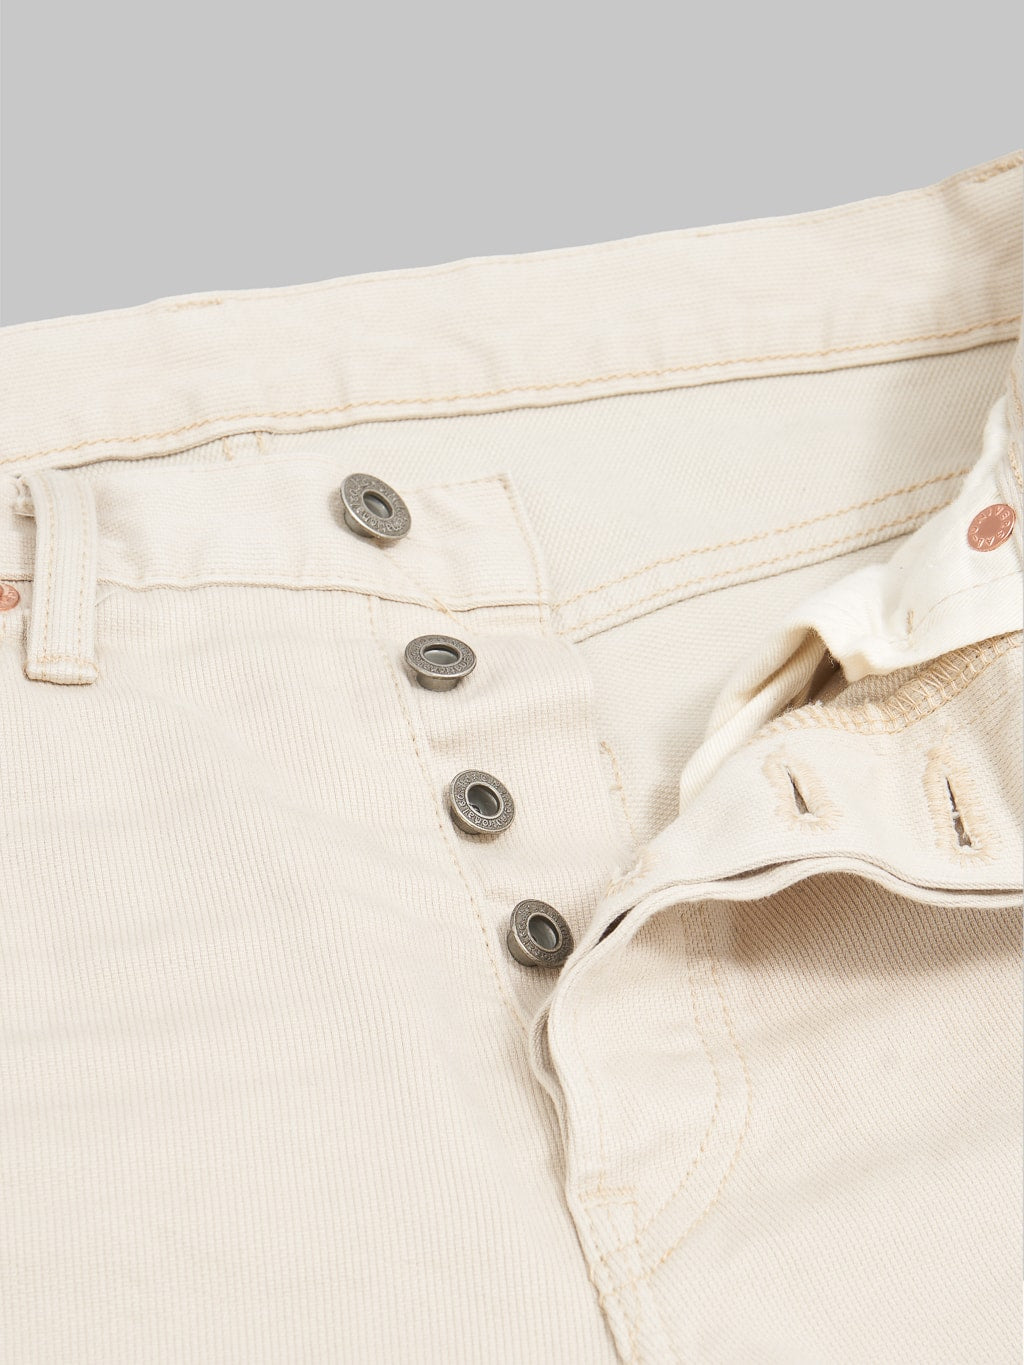 oni denim 216 california pique sand beige neat straight jeans copper buttons